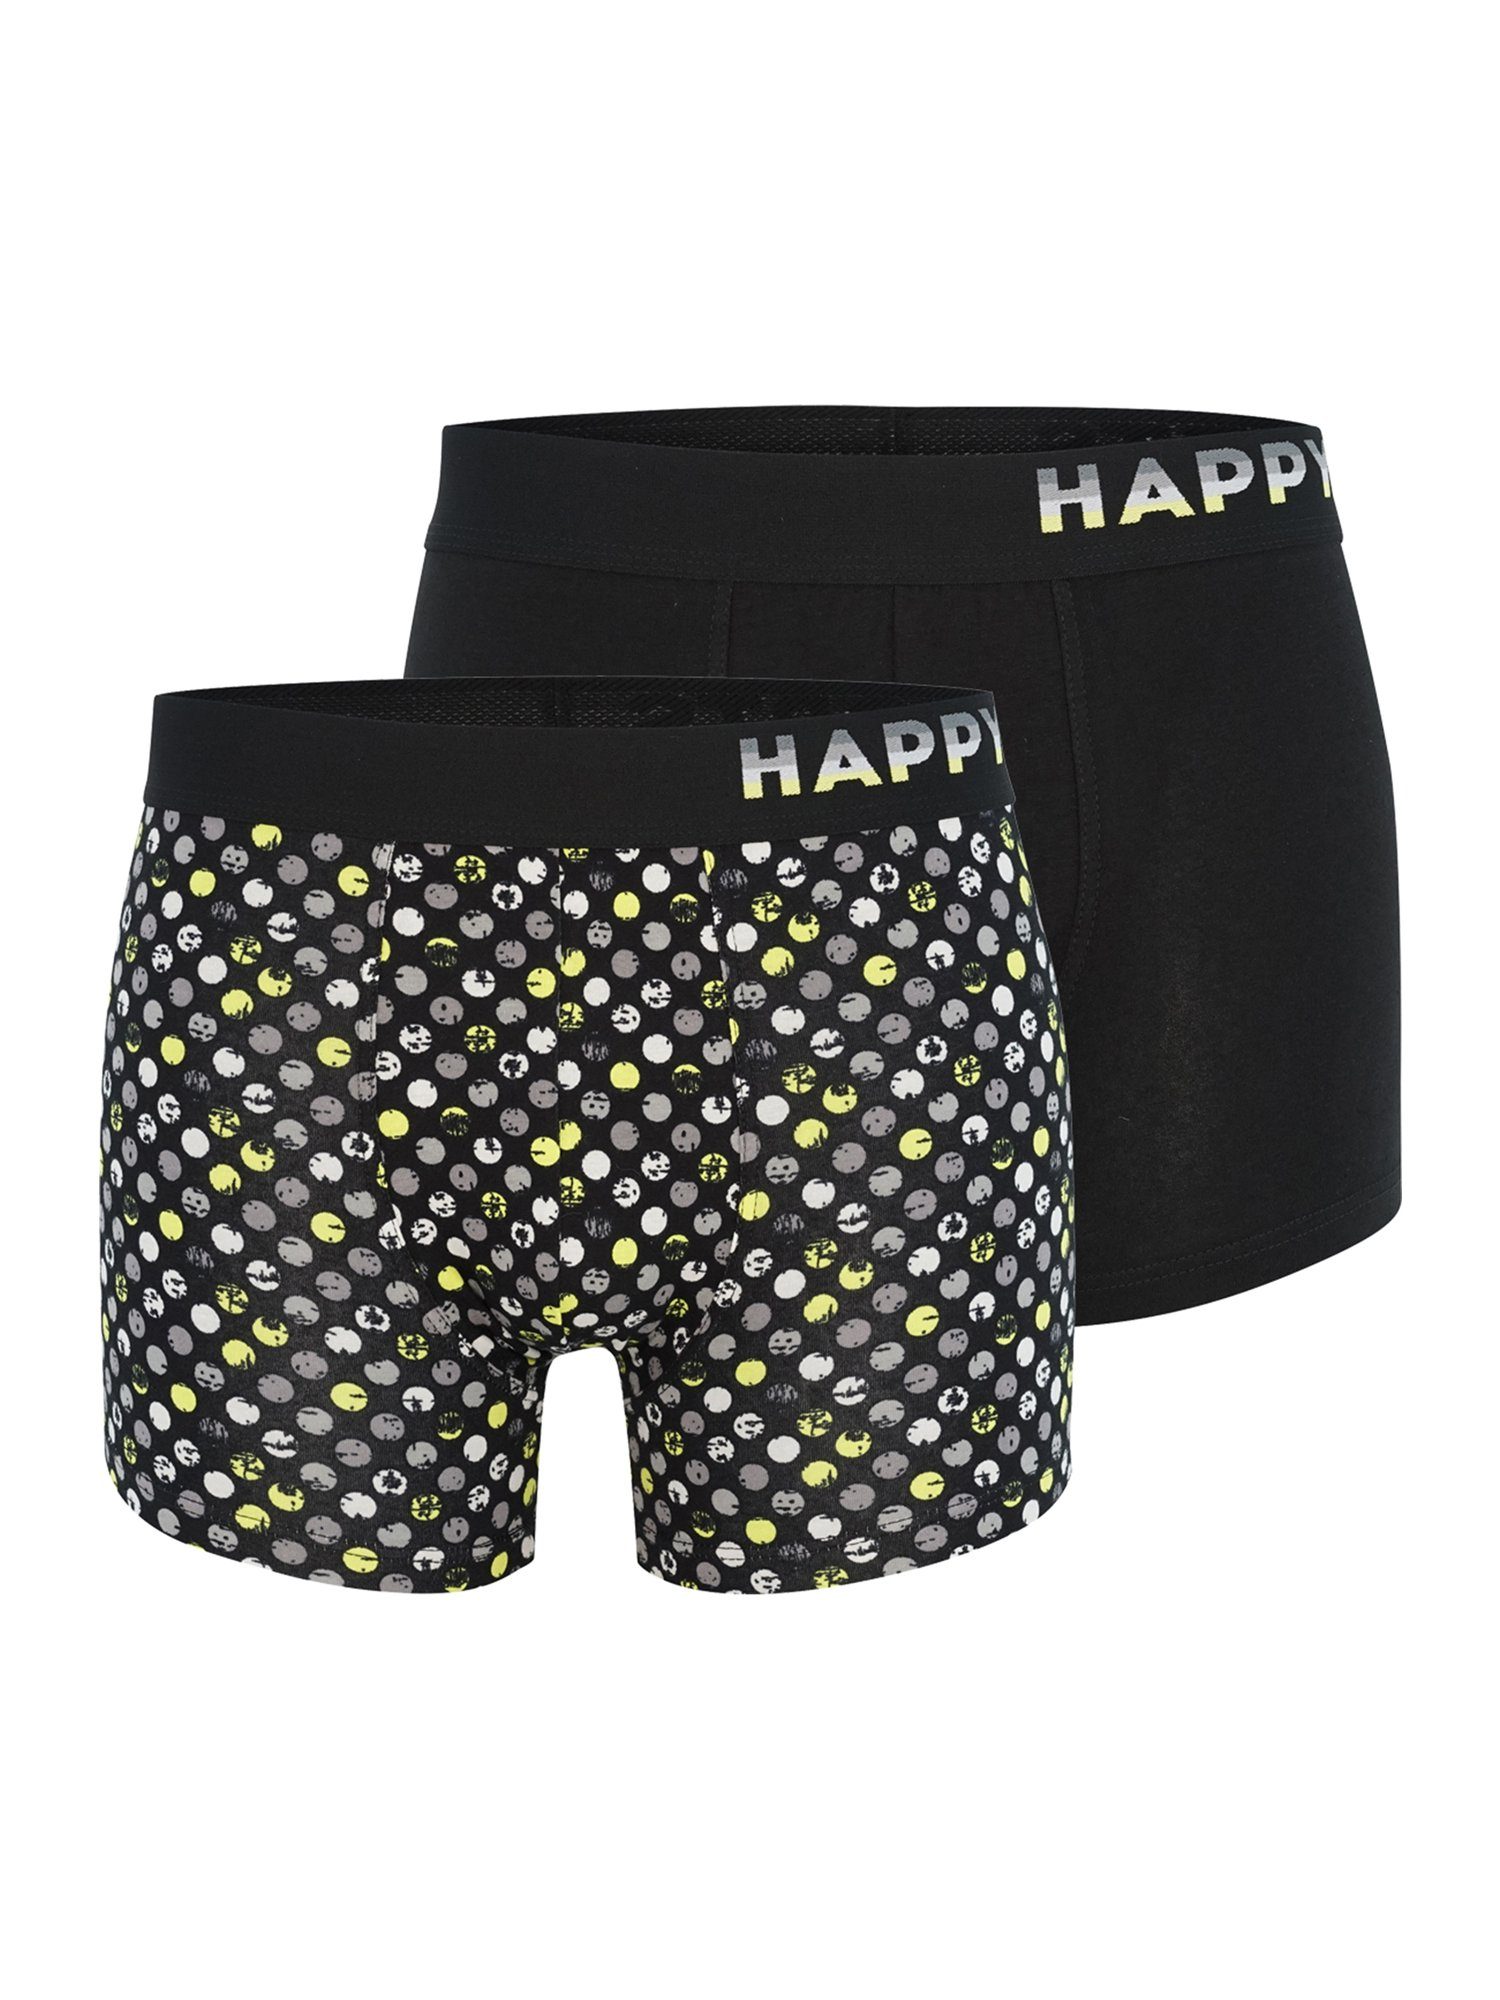 HAPPY SHORTS Retro Pants Motivprint Trunks Neon Polka